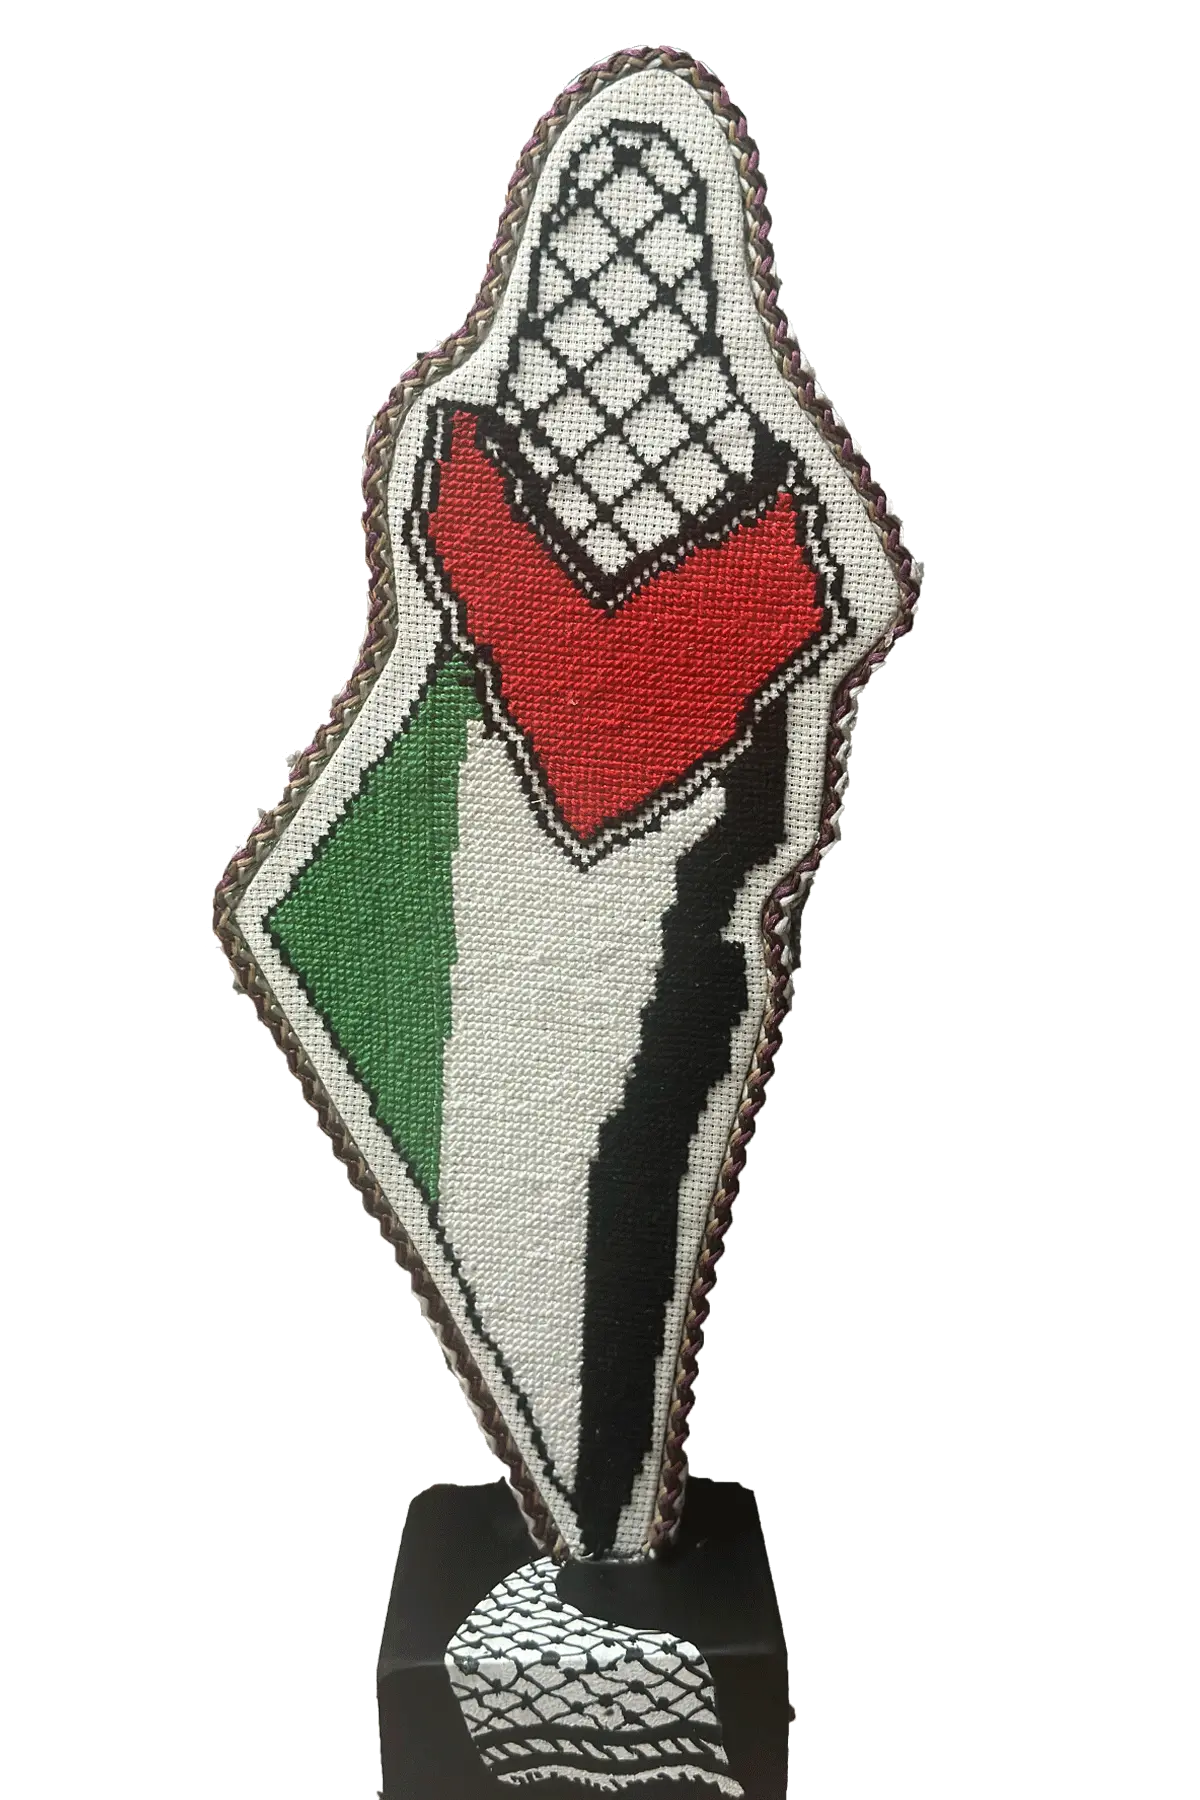 Palestine Flag map